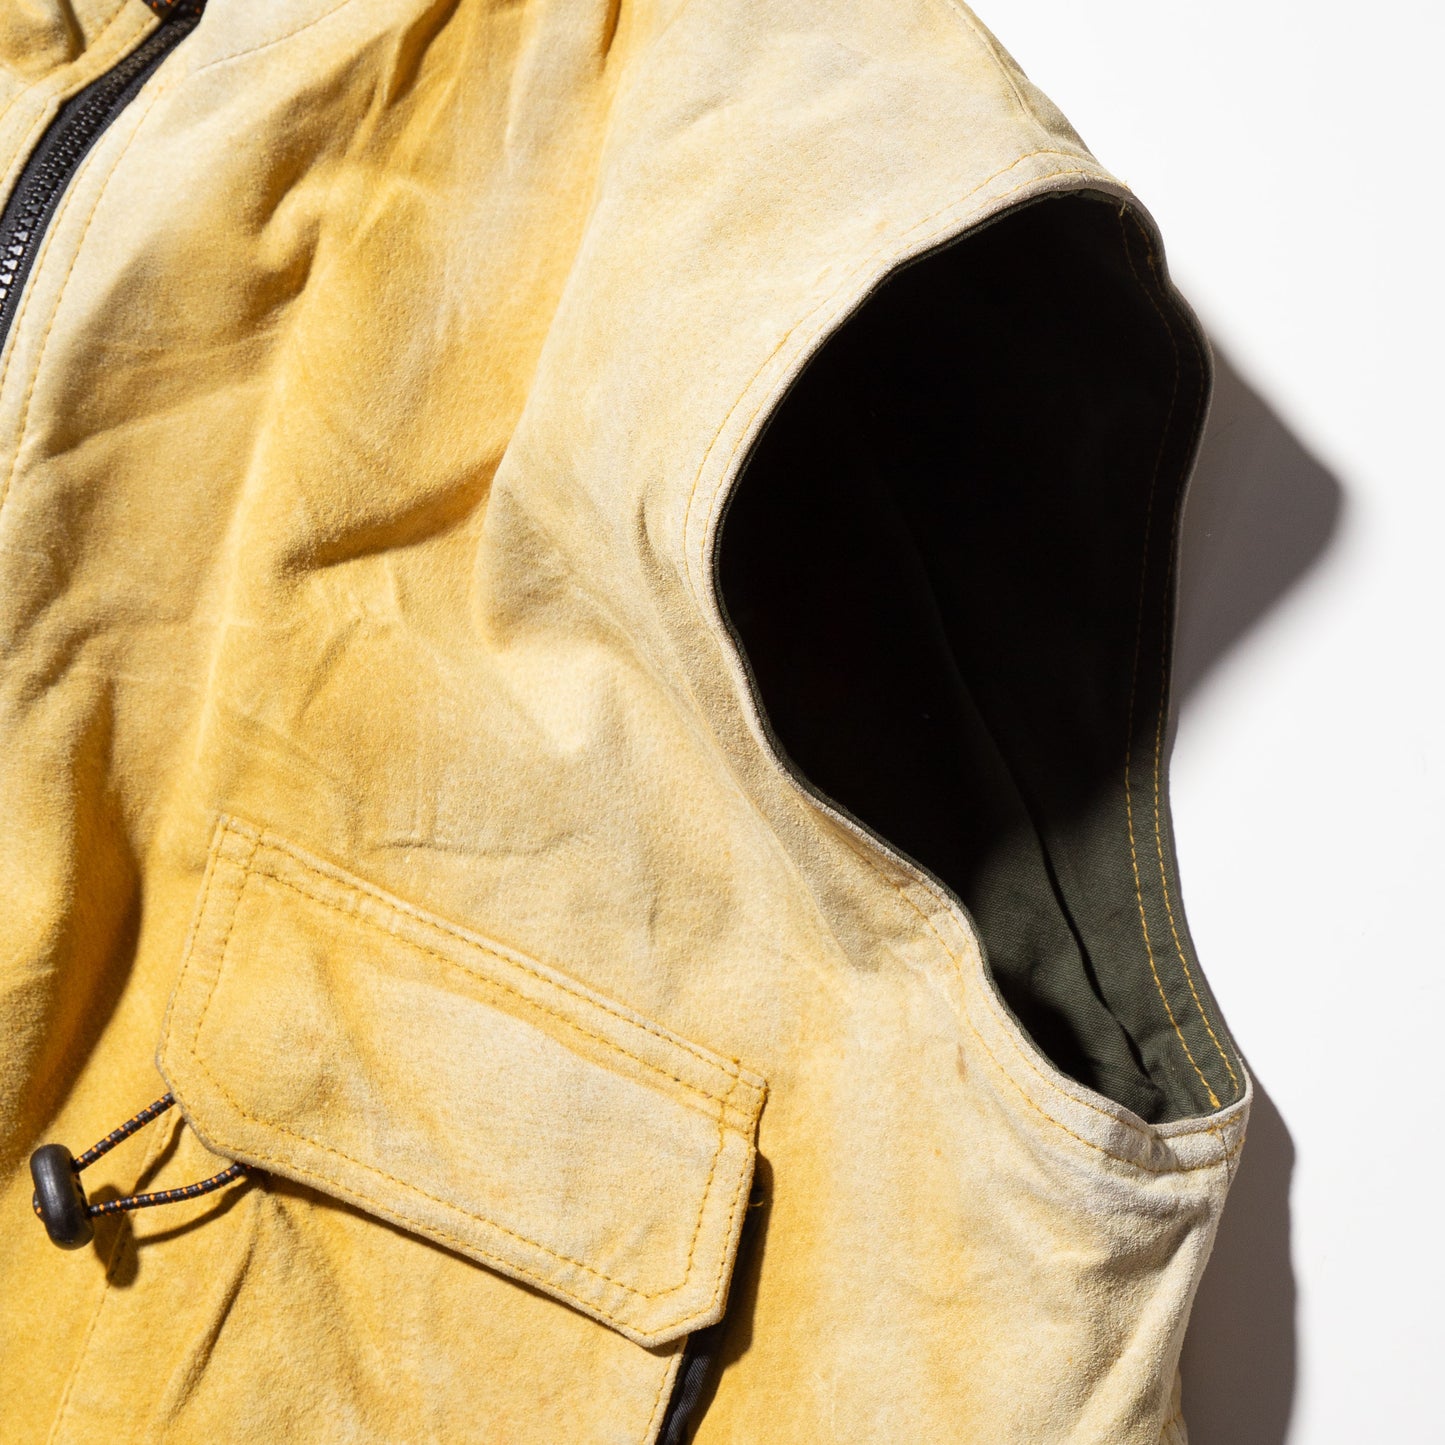 vintage faded leather utility vest